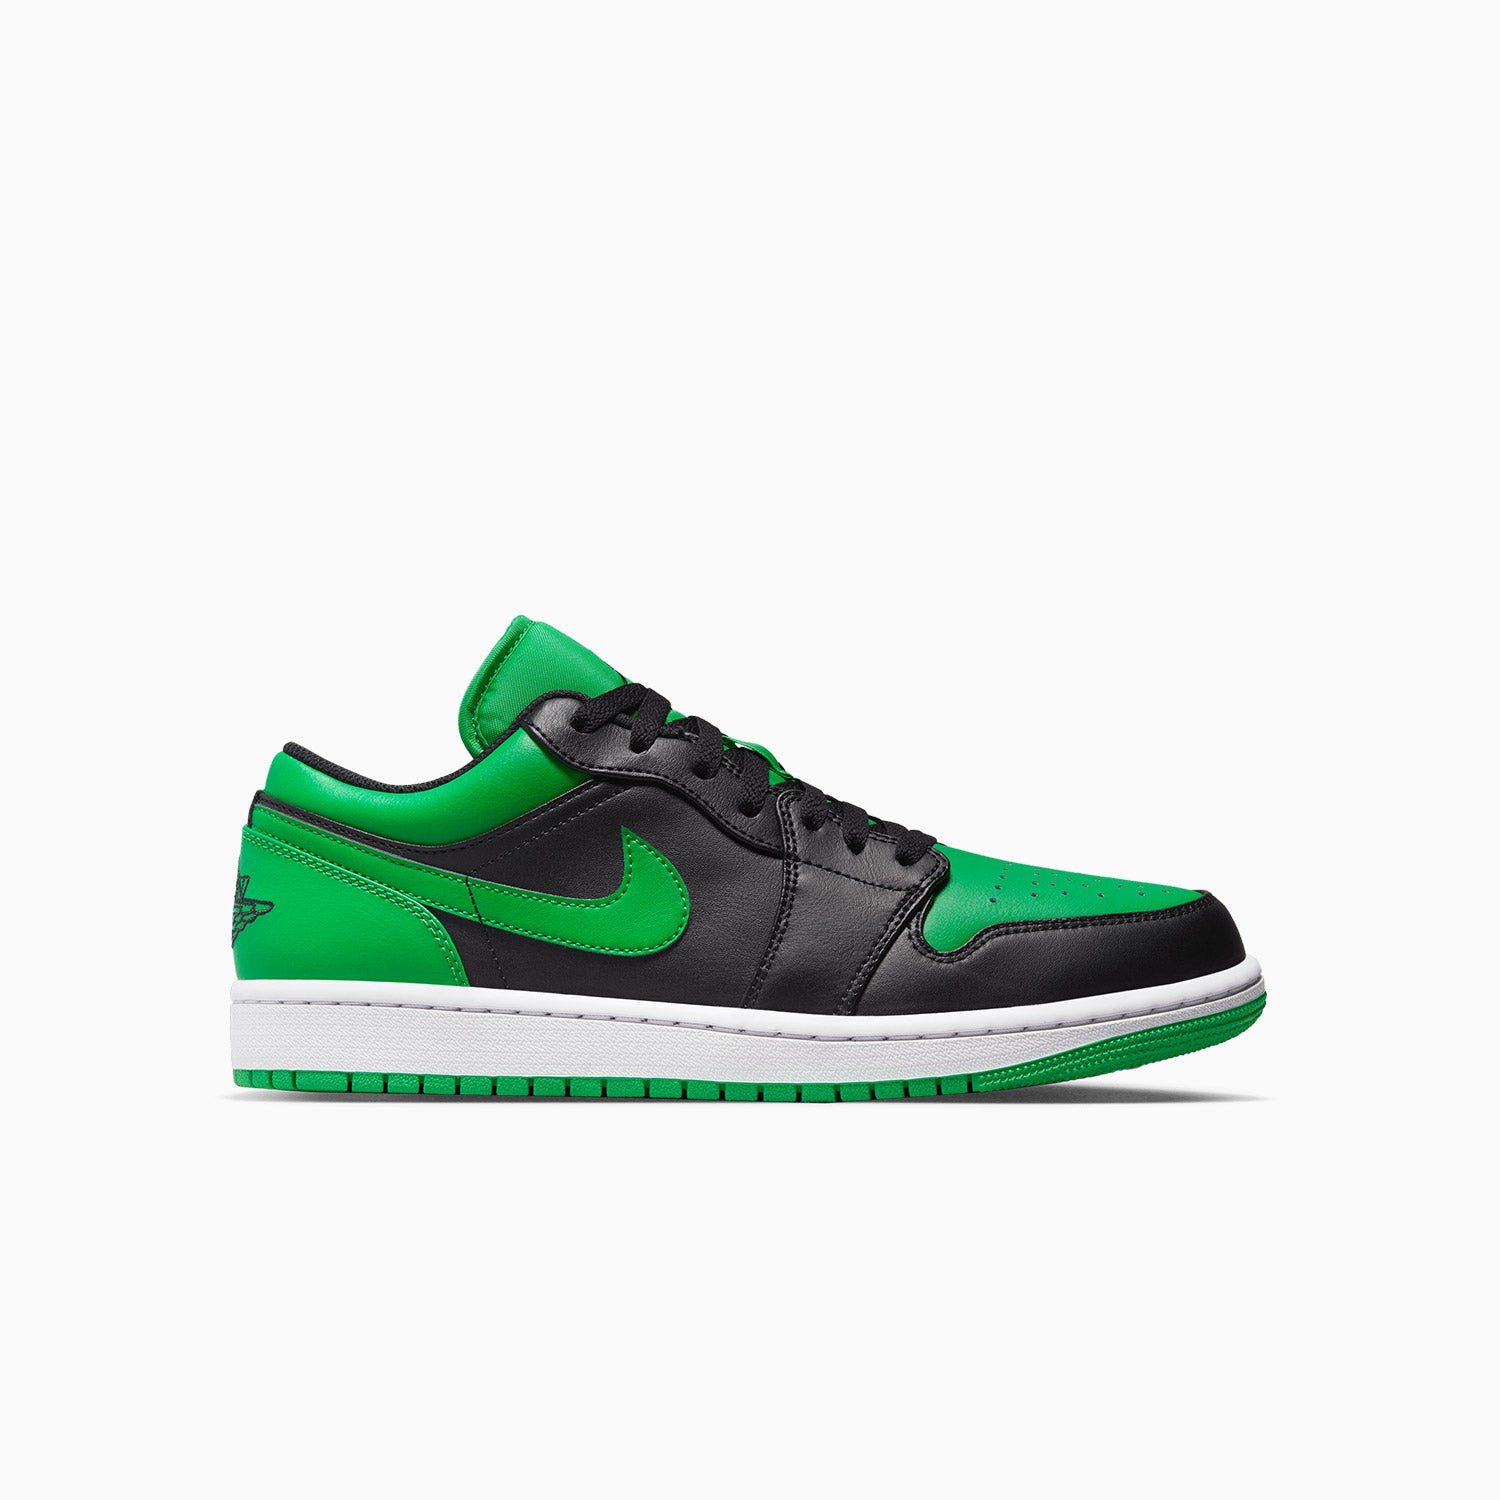 mens-air-jordan-1-low-lucky-green-shoes-553558-065